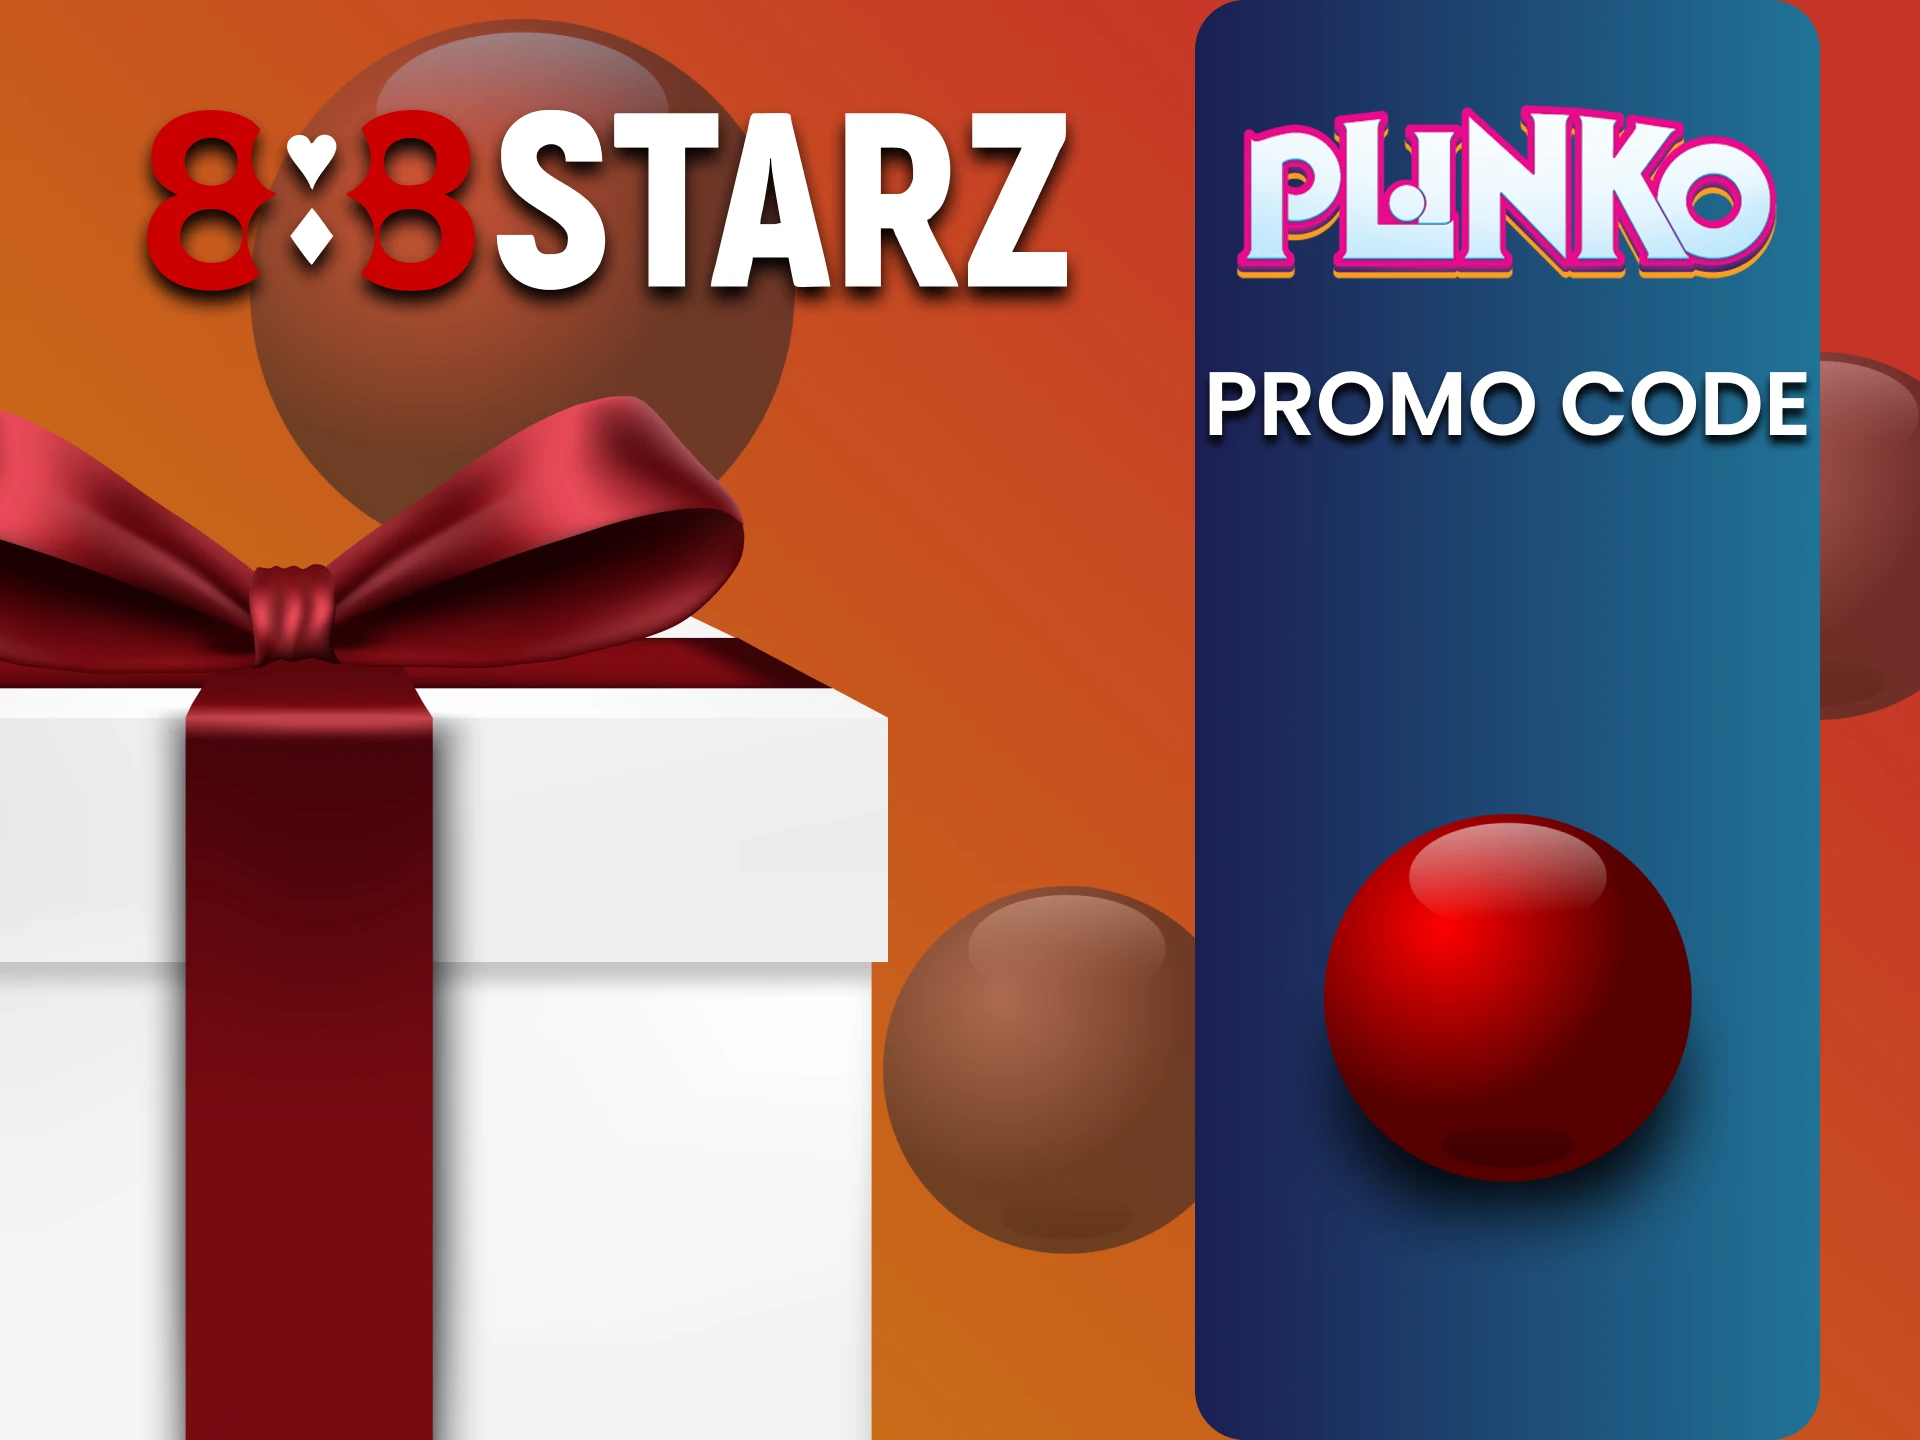 Use promo code from 888starz for Plinko.